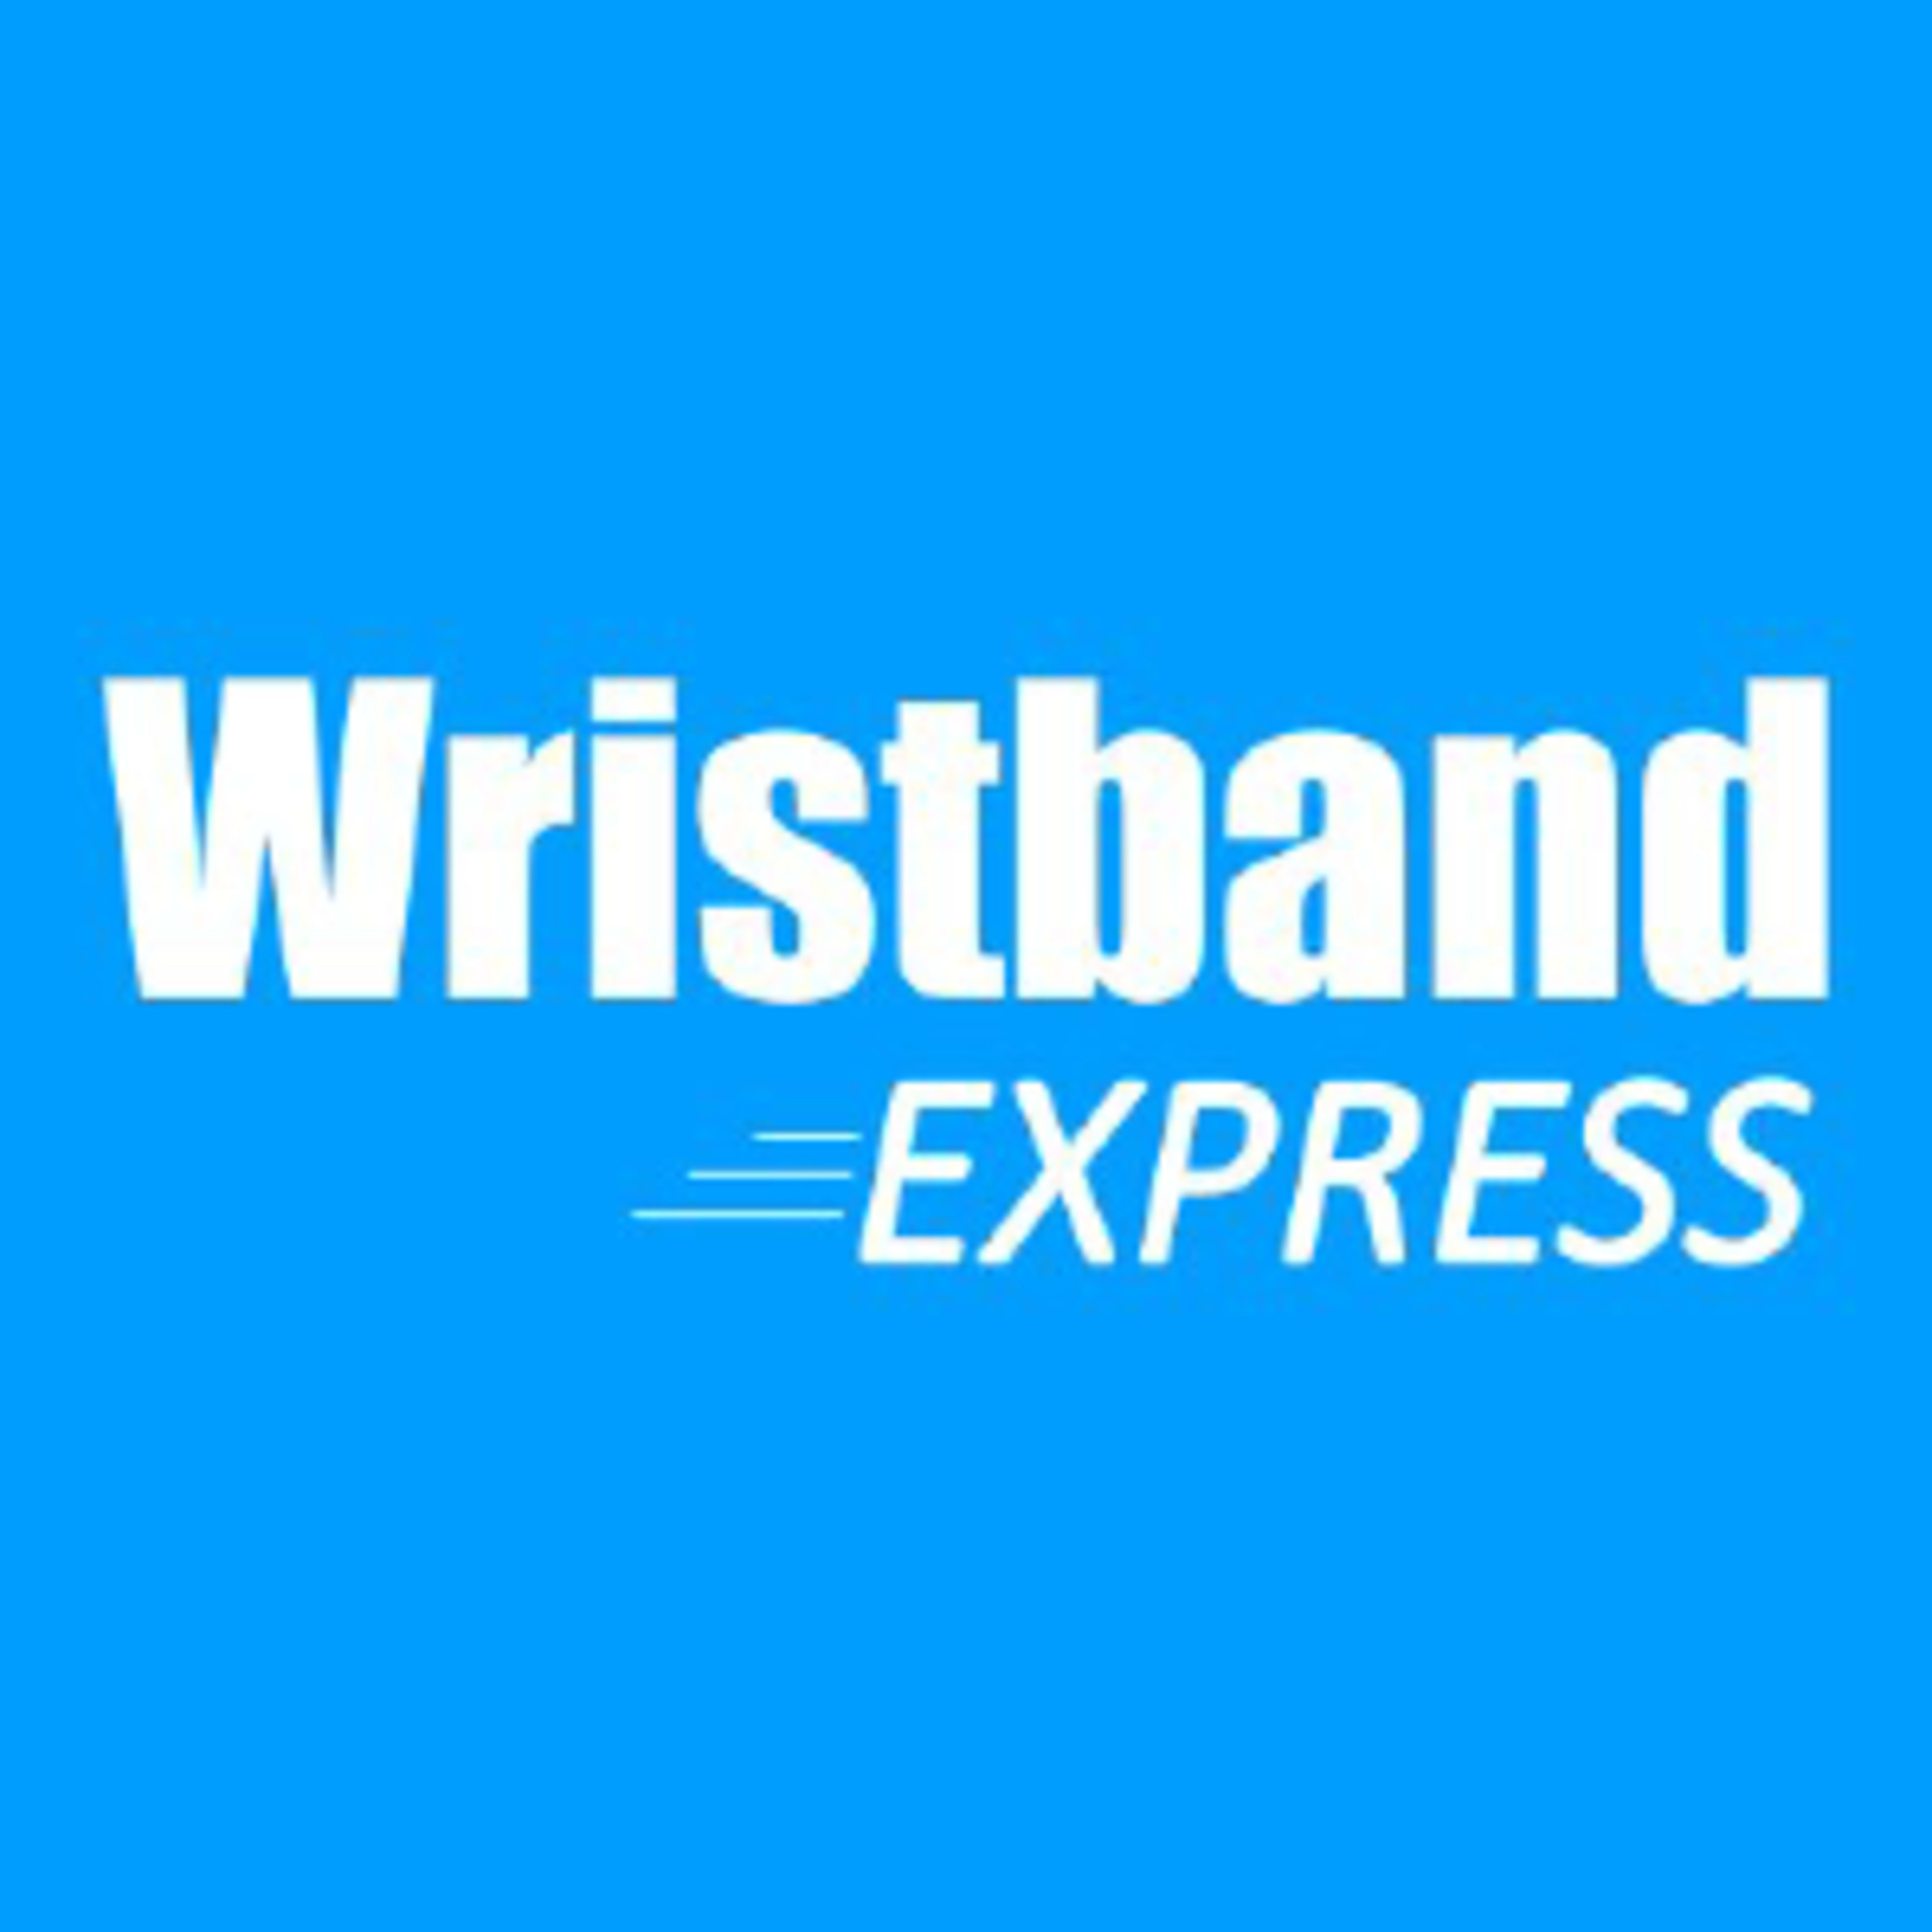 WristbandExpress Code